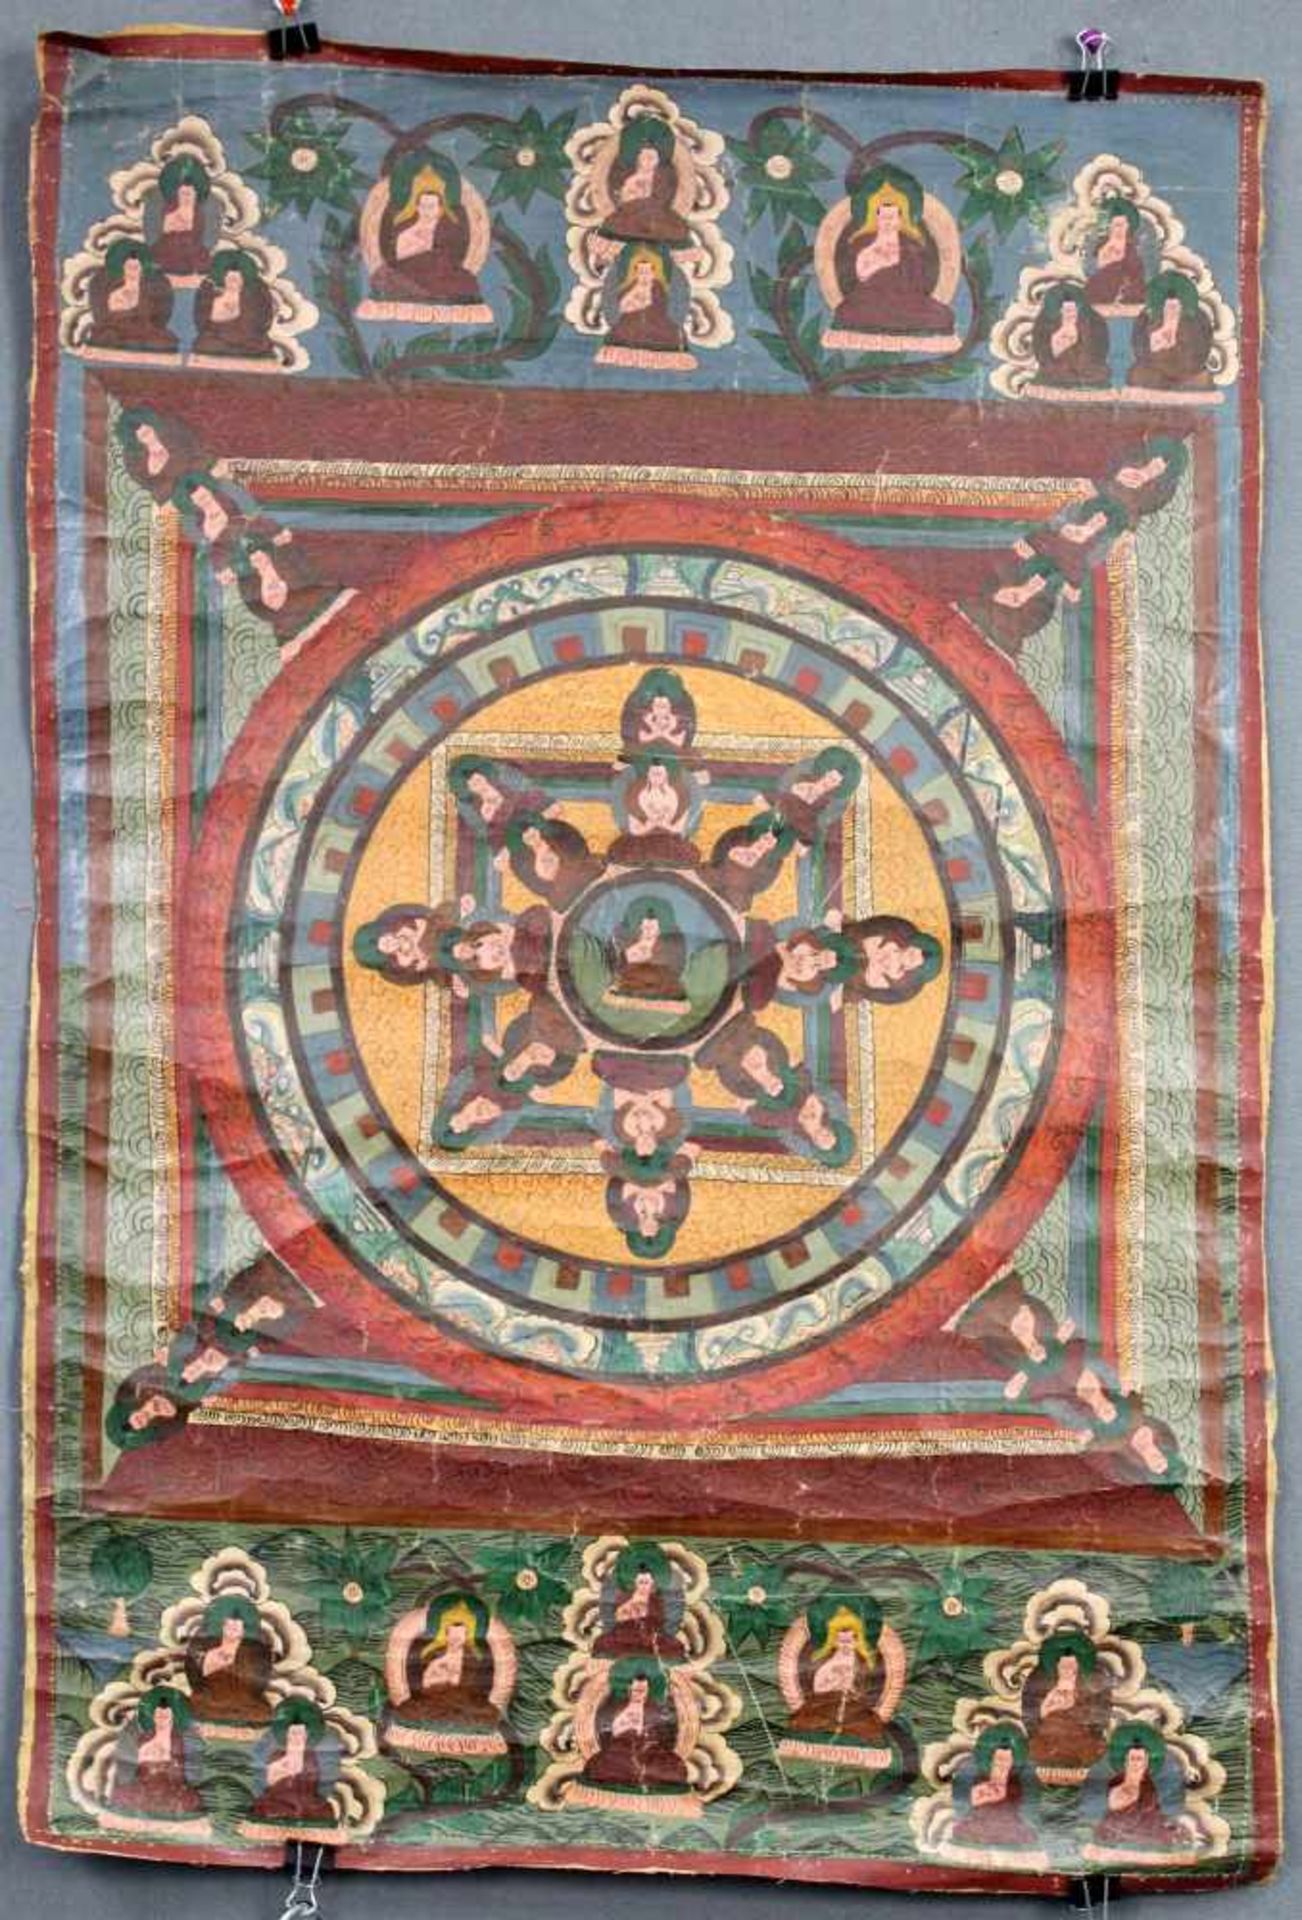 Meditations Mandala, China / Tibet alt. Buddha mit Gurus.71 cm x 48,5 cm. Gemälde. Zusätzlich zu den